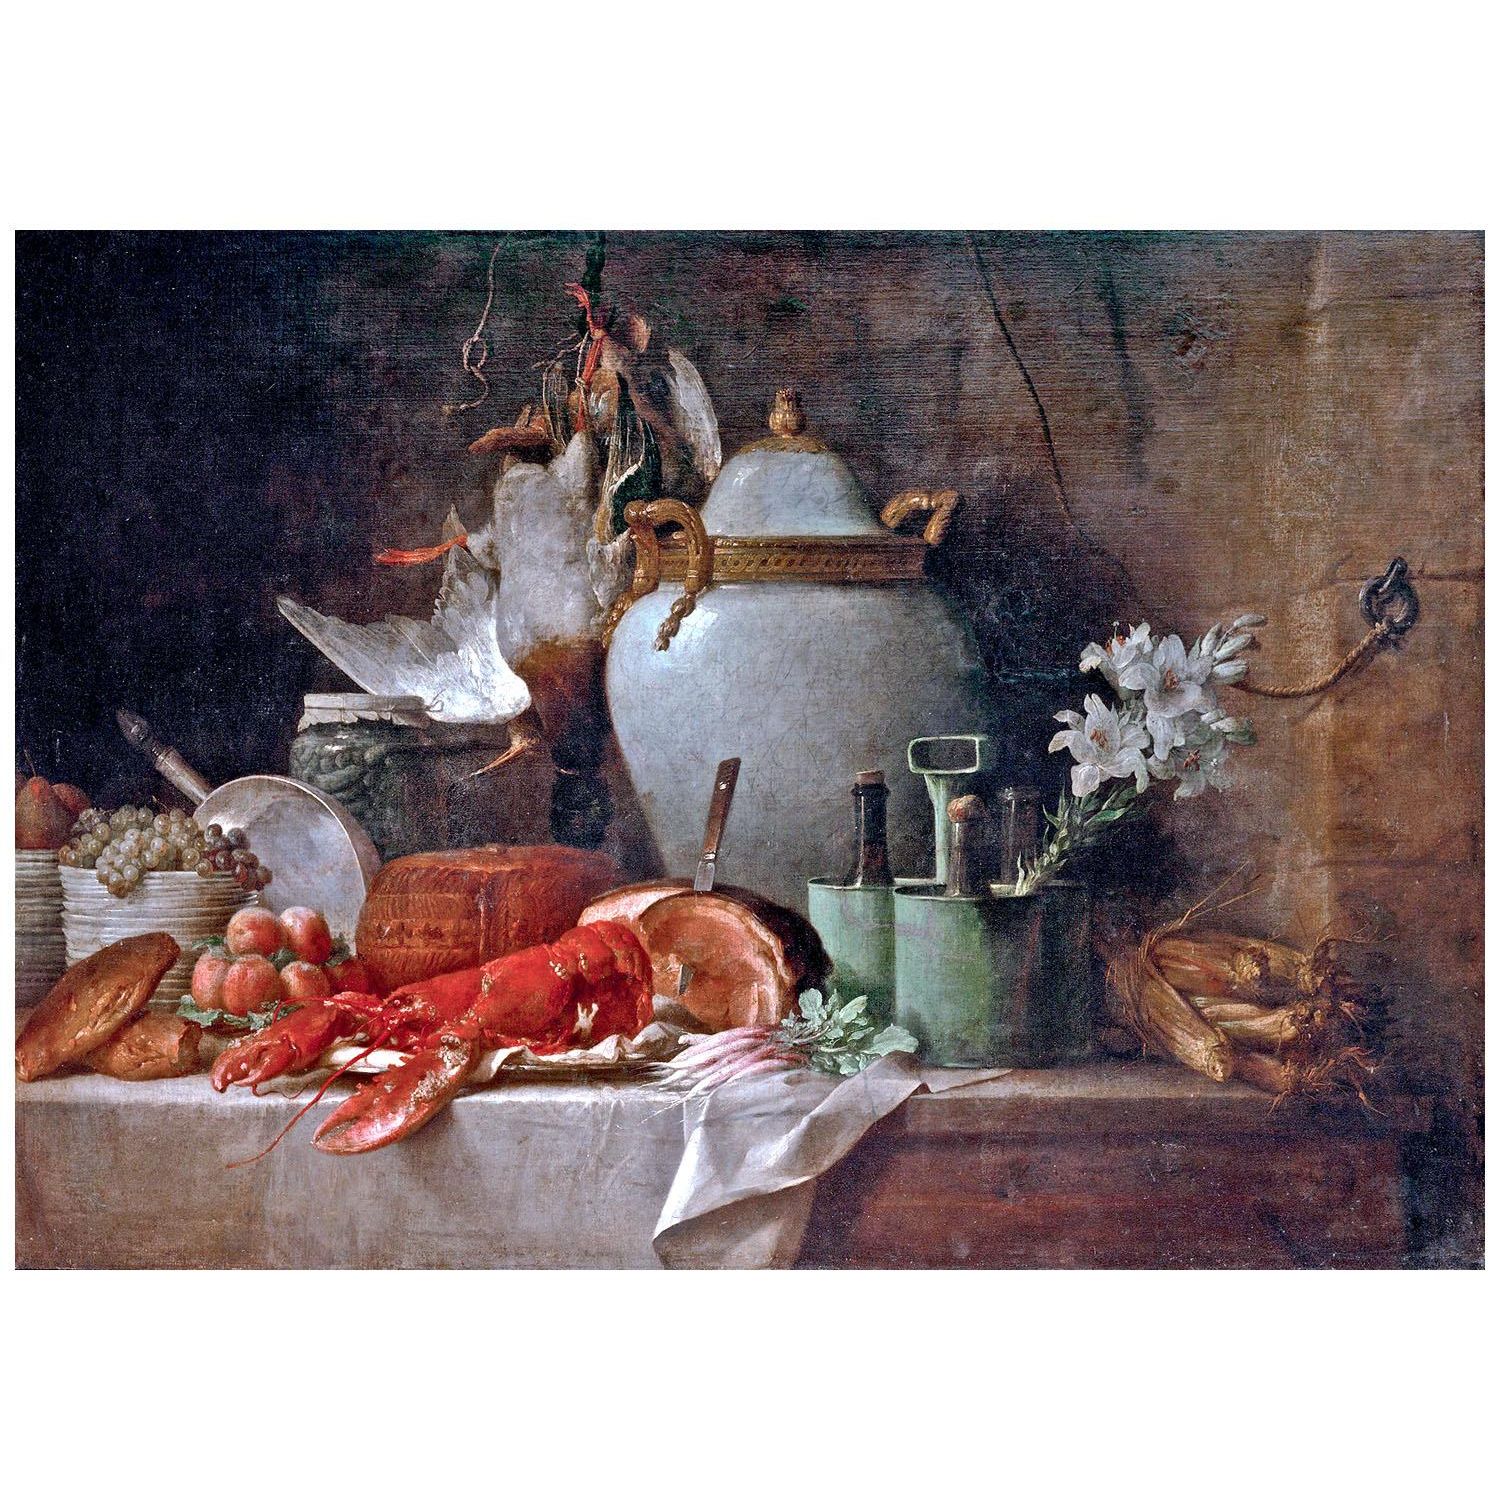 Anne Vallayer-Coster. Vase, homard, fruits et gibier. 1817. Musee du Louvre